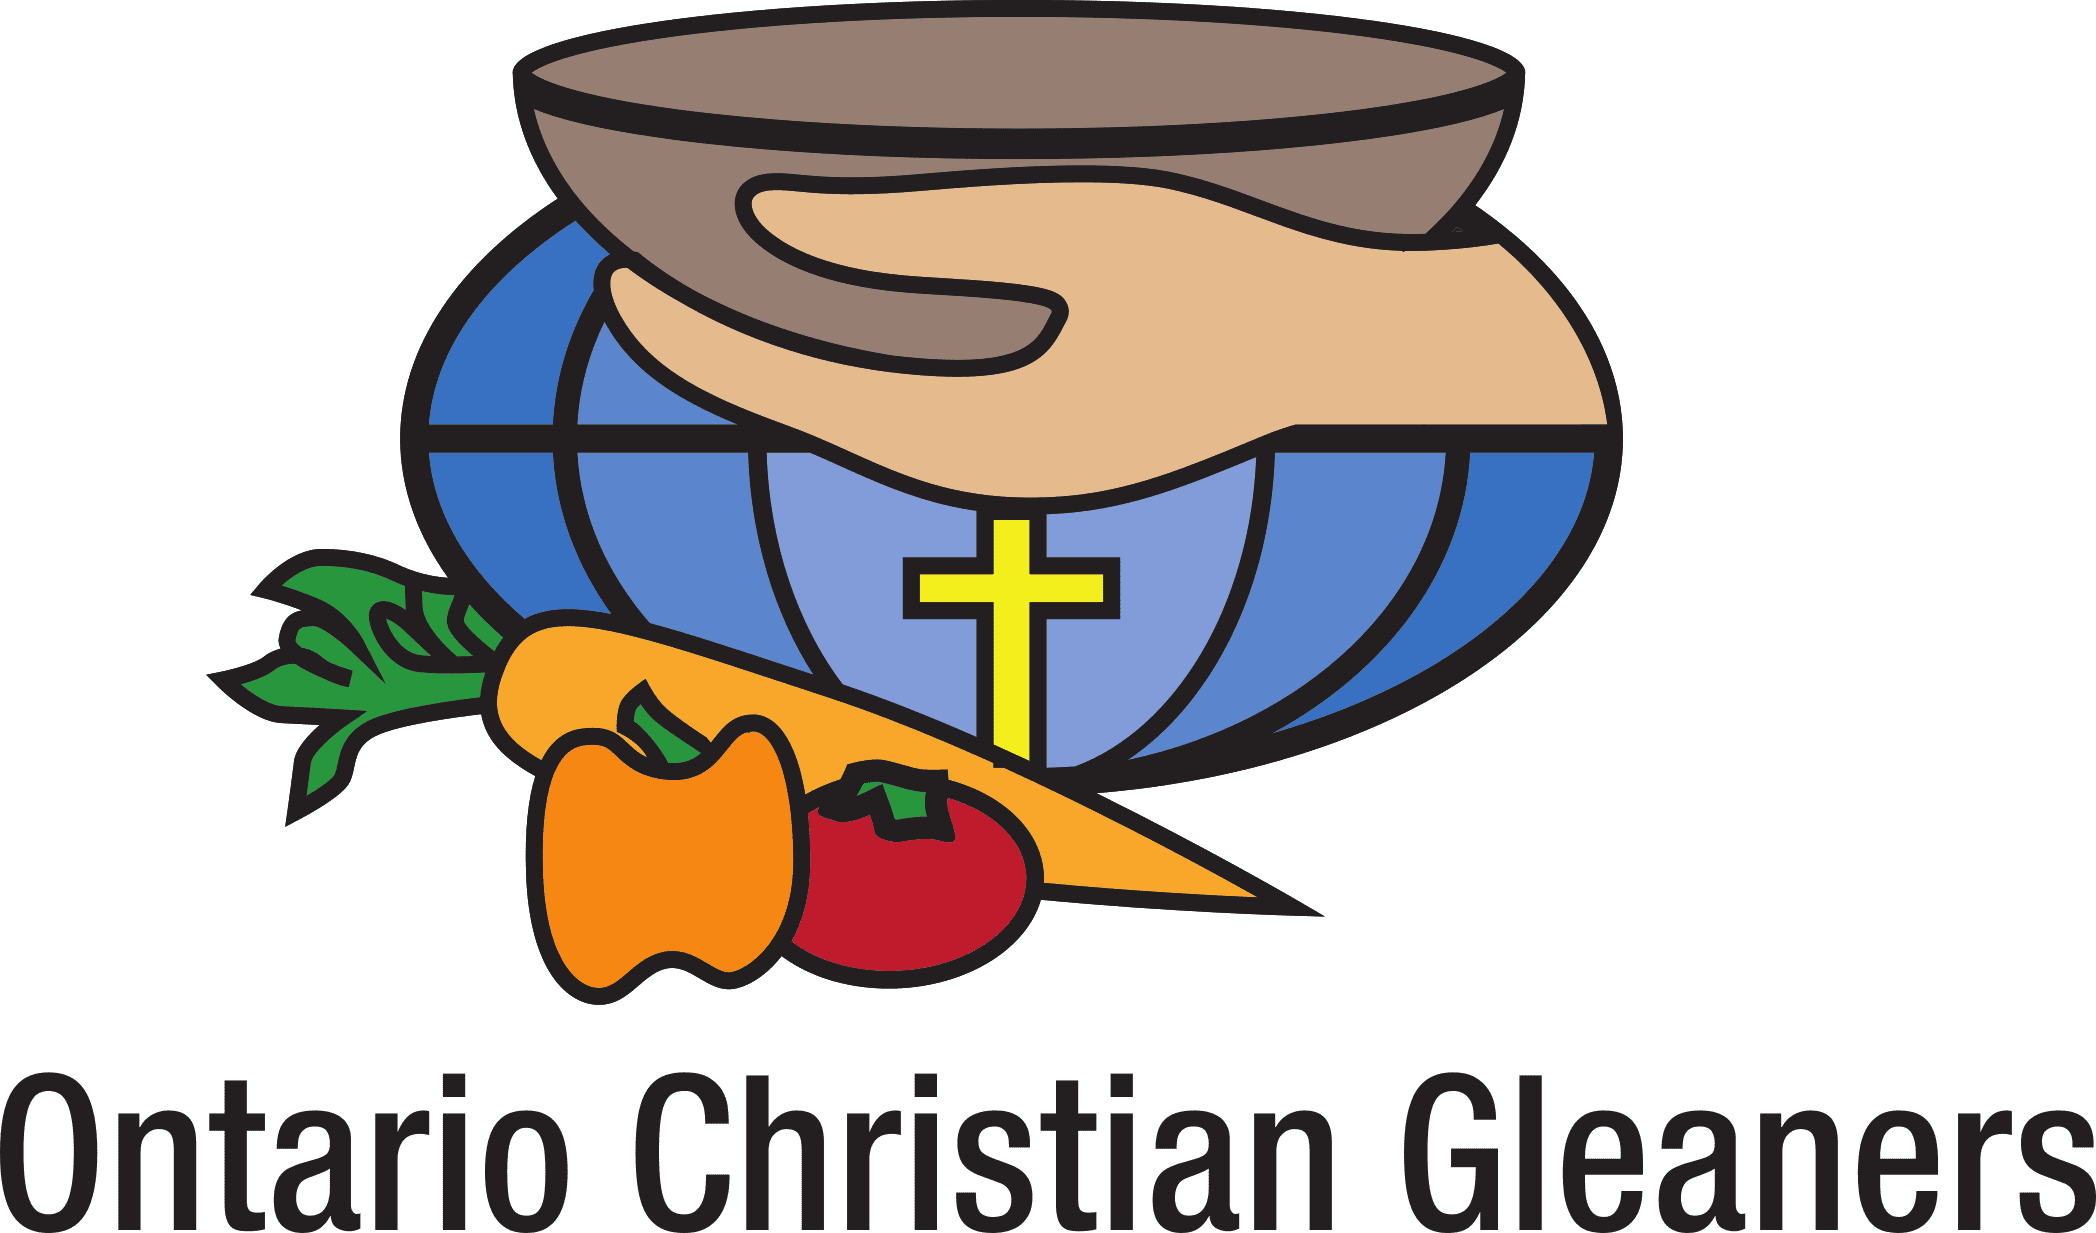 Ontario Christian Gleaners logo